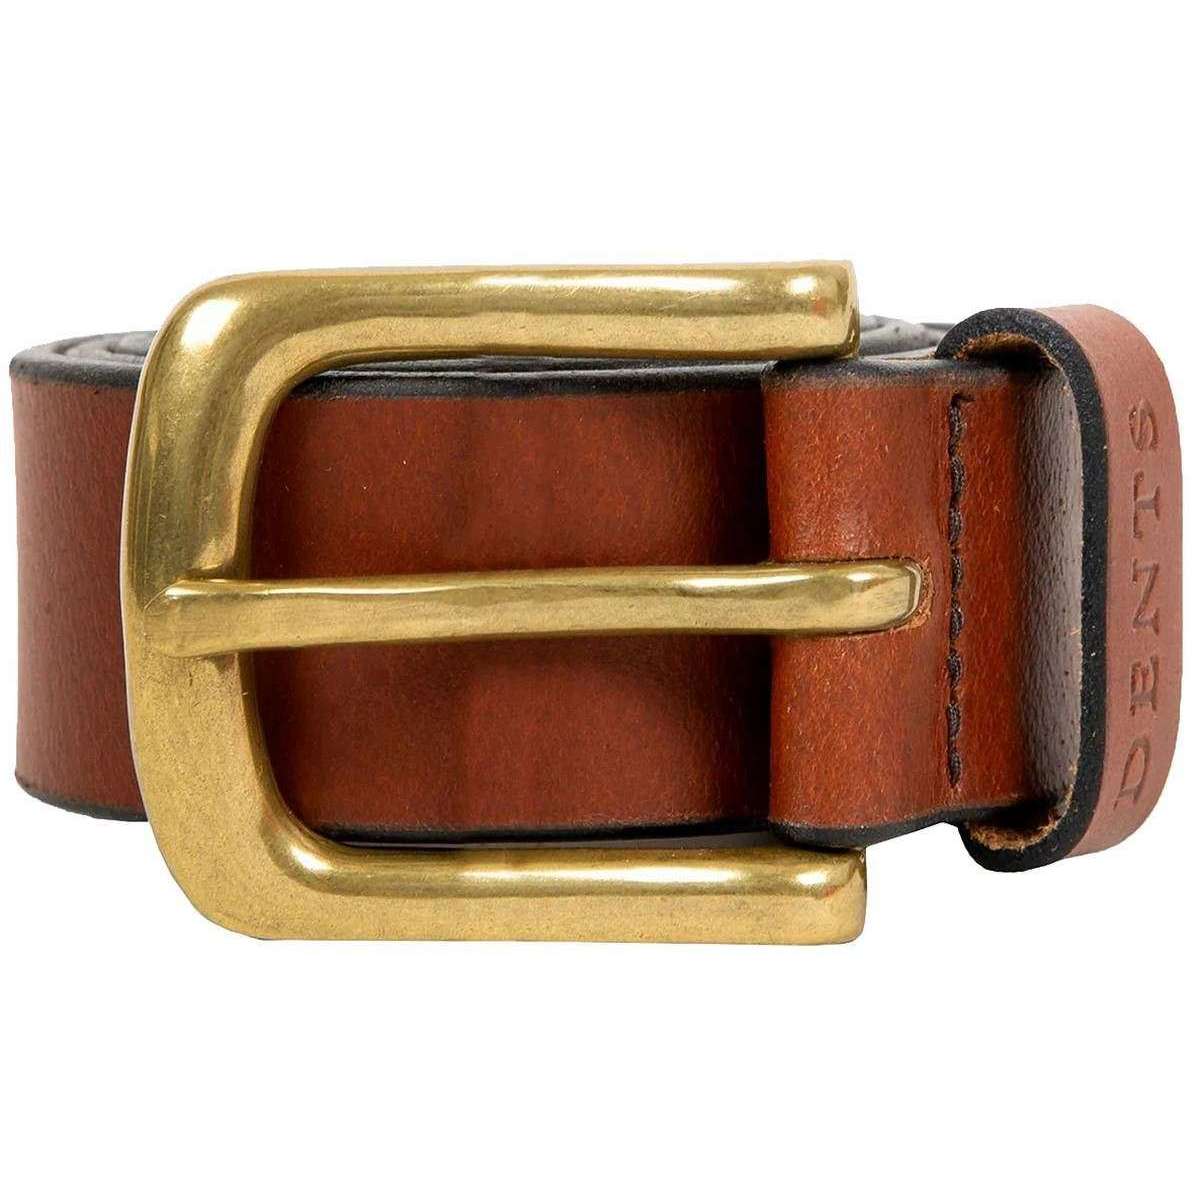 Dents Heritage Smooth Leather Belt - Tan - Medium - 34-36" | 86-91cm